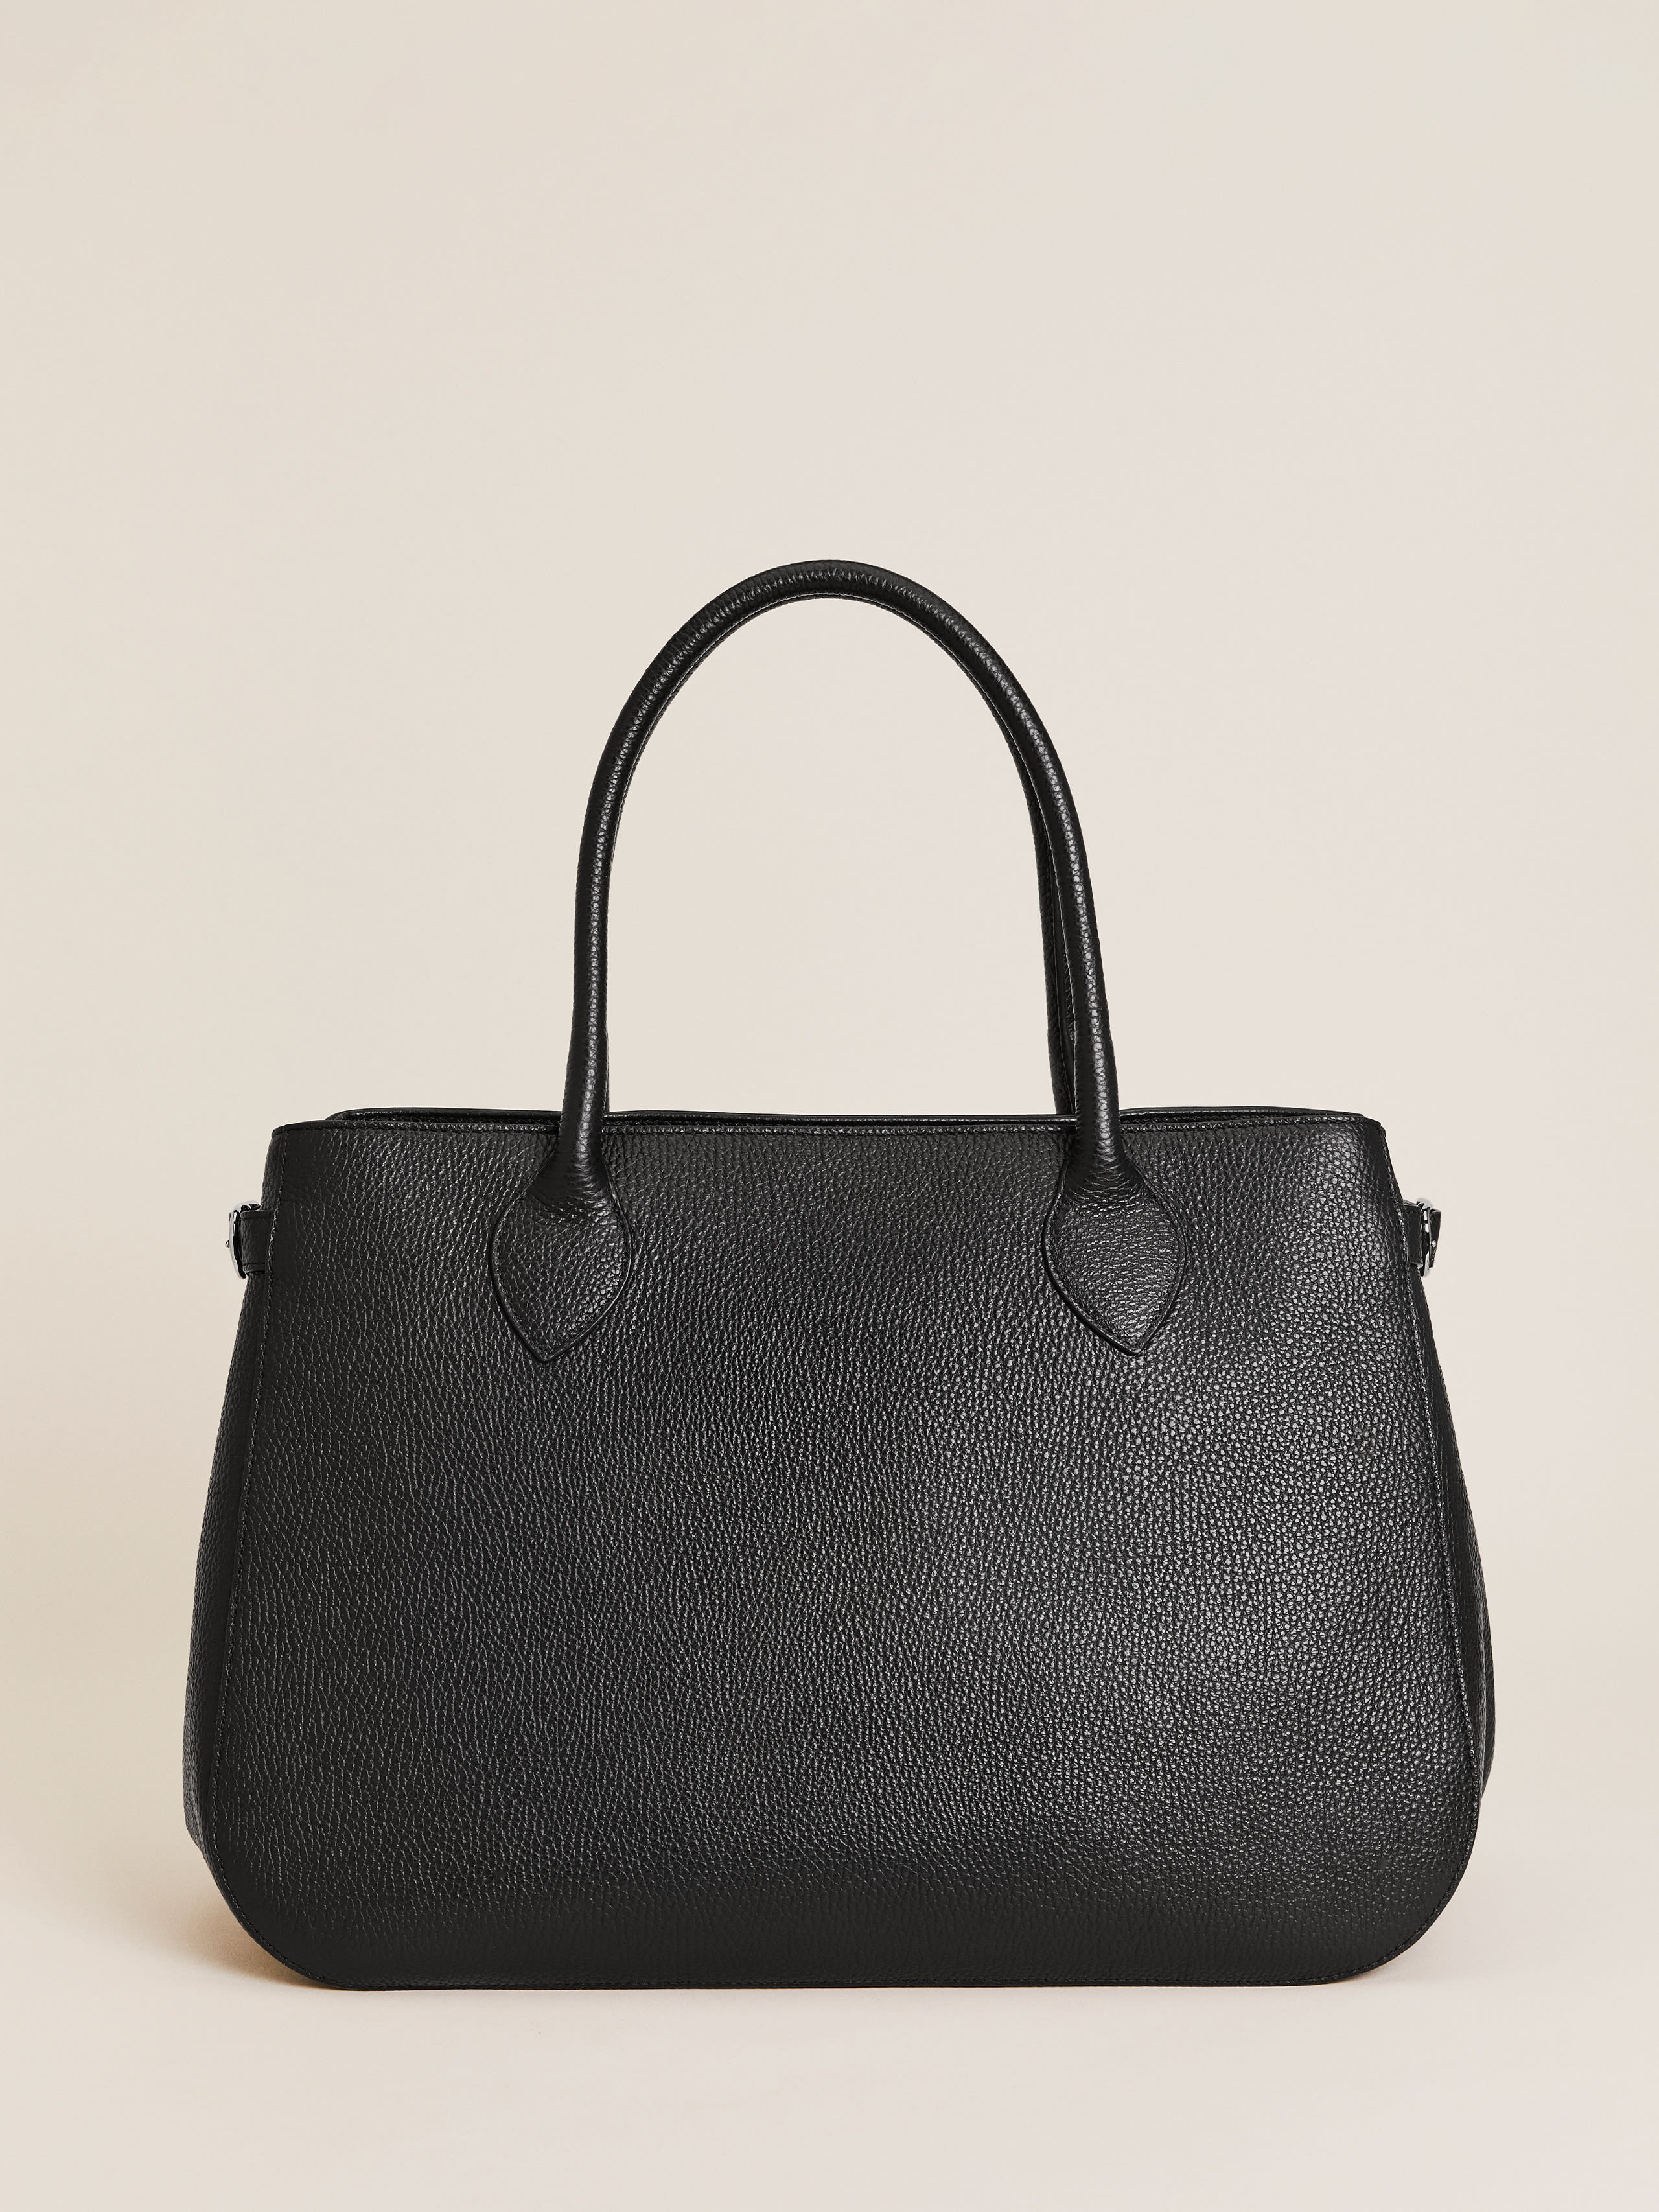 Reformation black top-handle tote bag